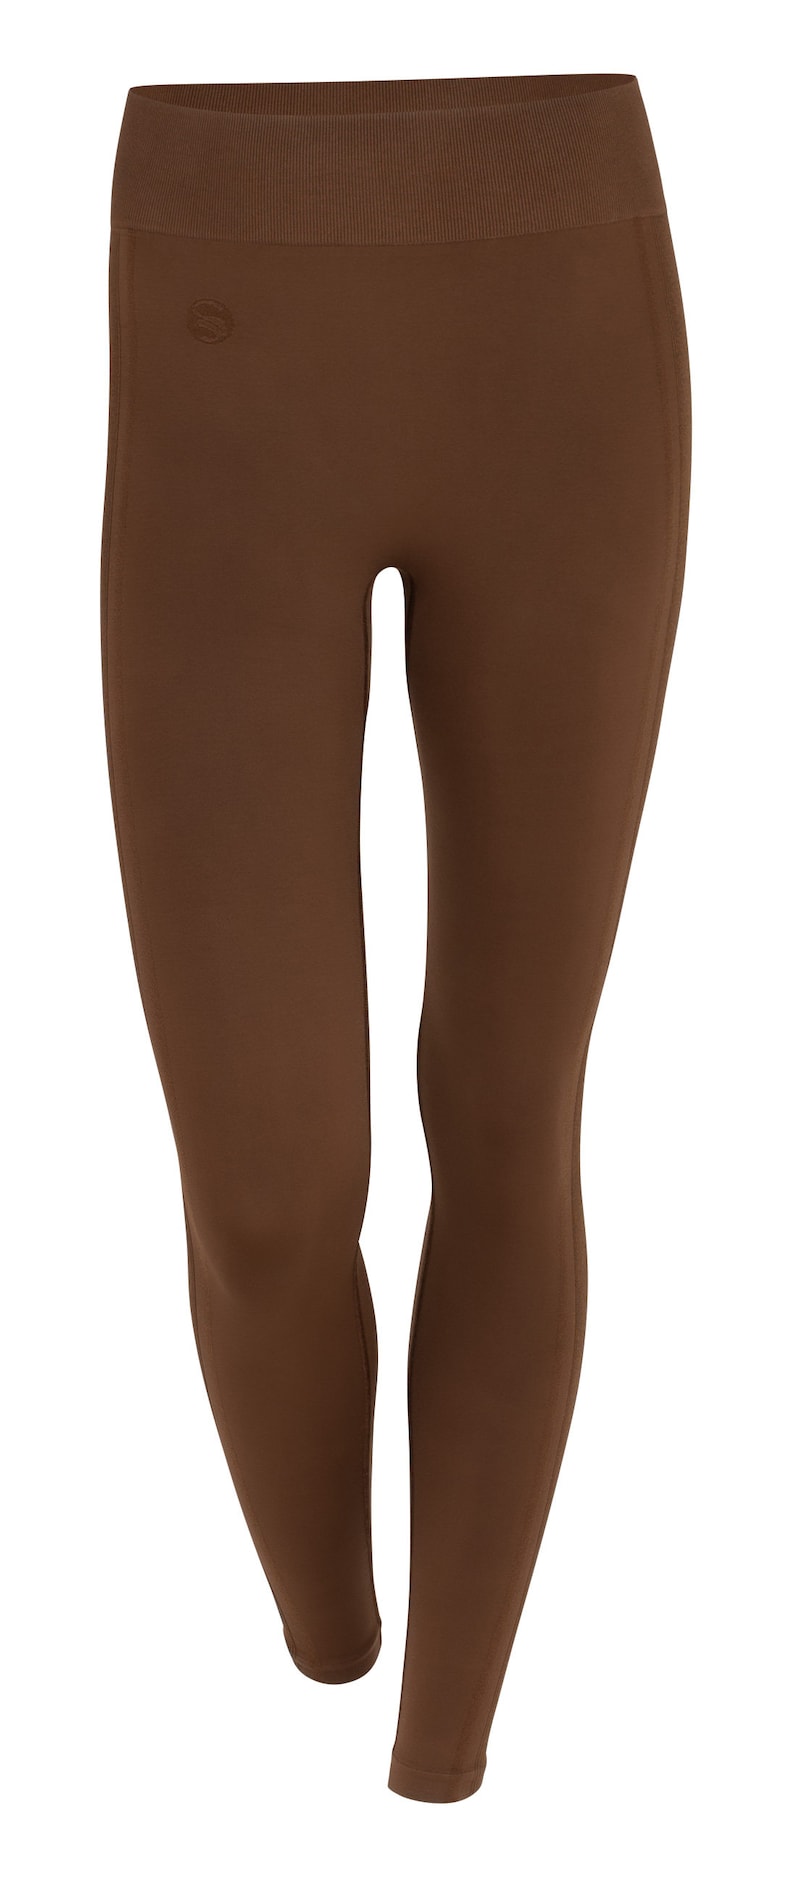 Stark Soul® Seamless Leggings OPAQUE, vielseitige, funktionale Damen Sport Leggings, Yogahose Coffee